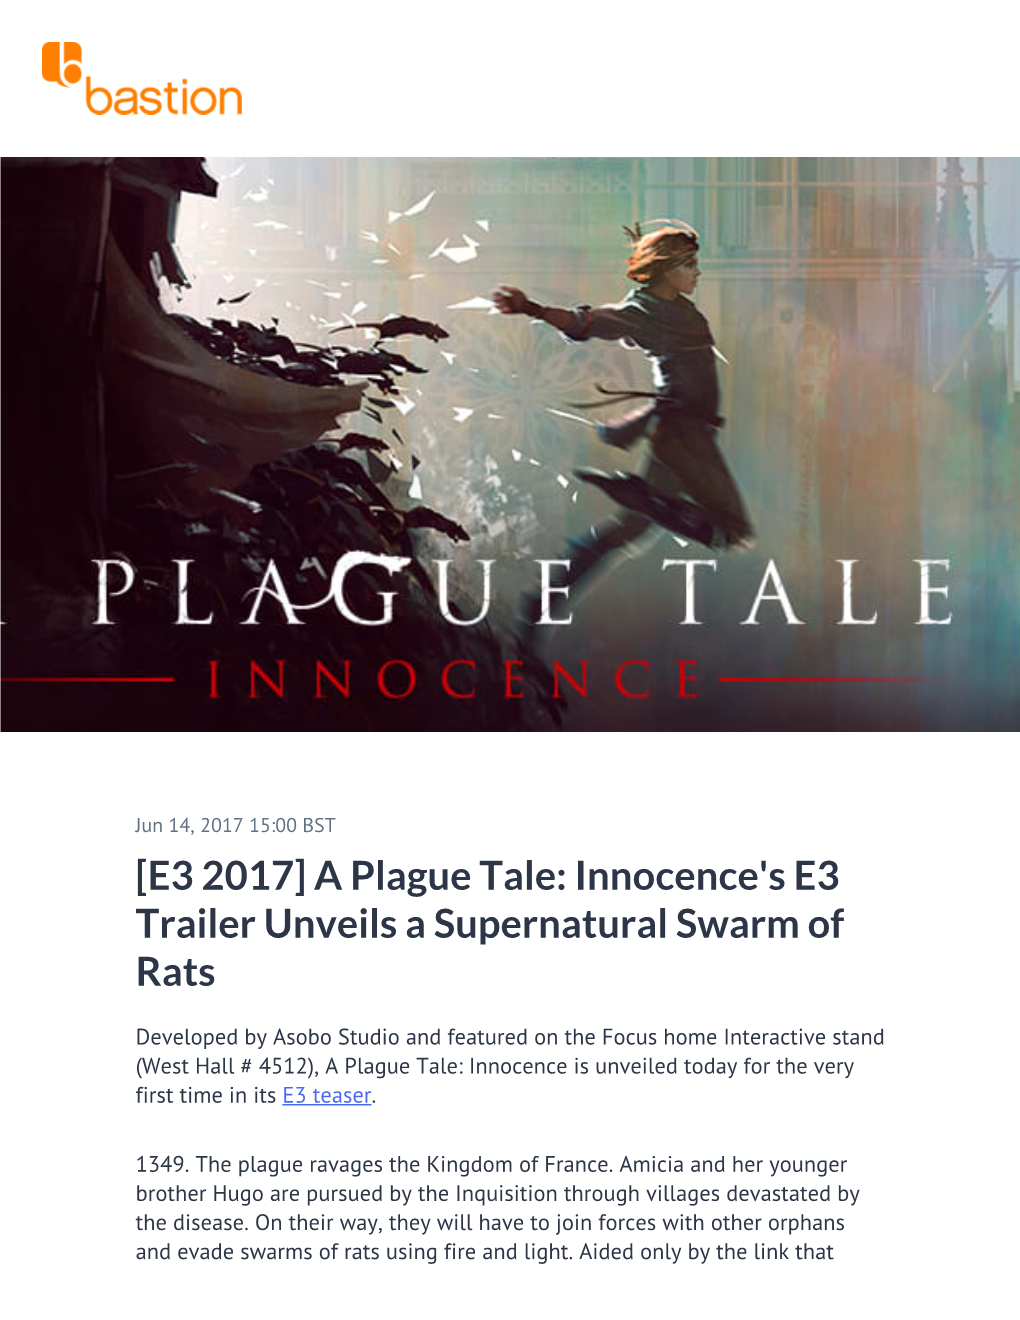 A Plague Tale: Innocence's E3 Trailer Unveils a Supernatural Swarm of Rats